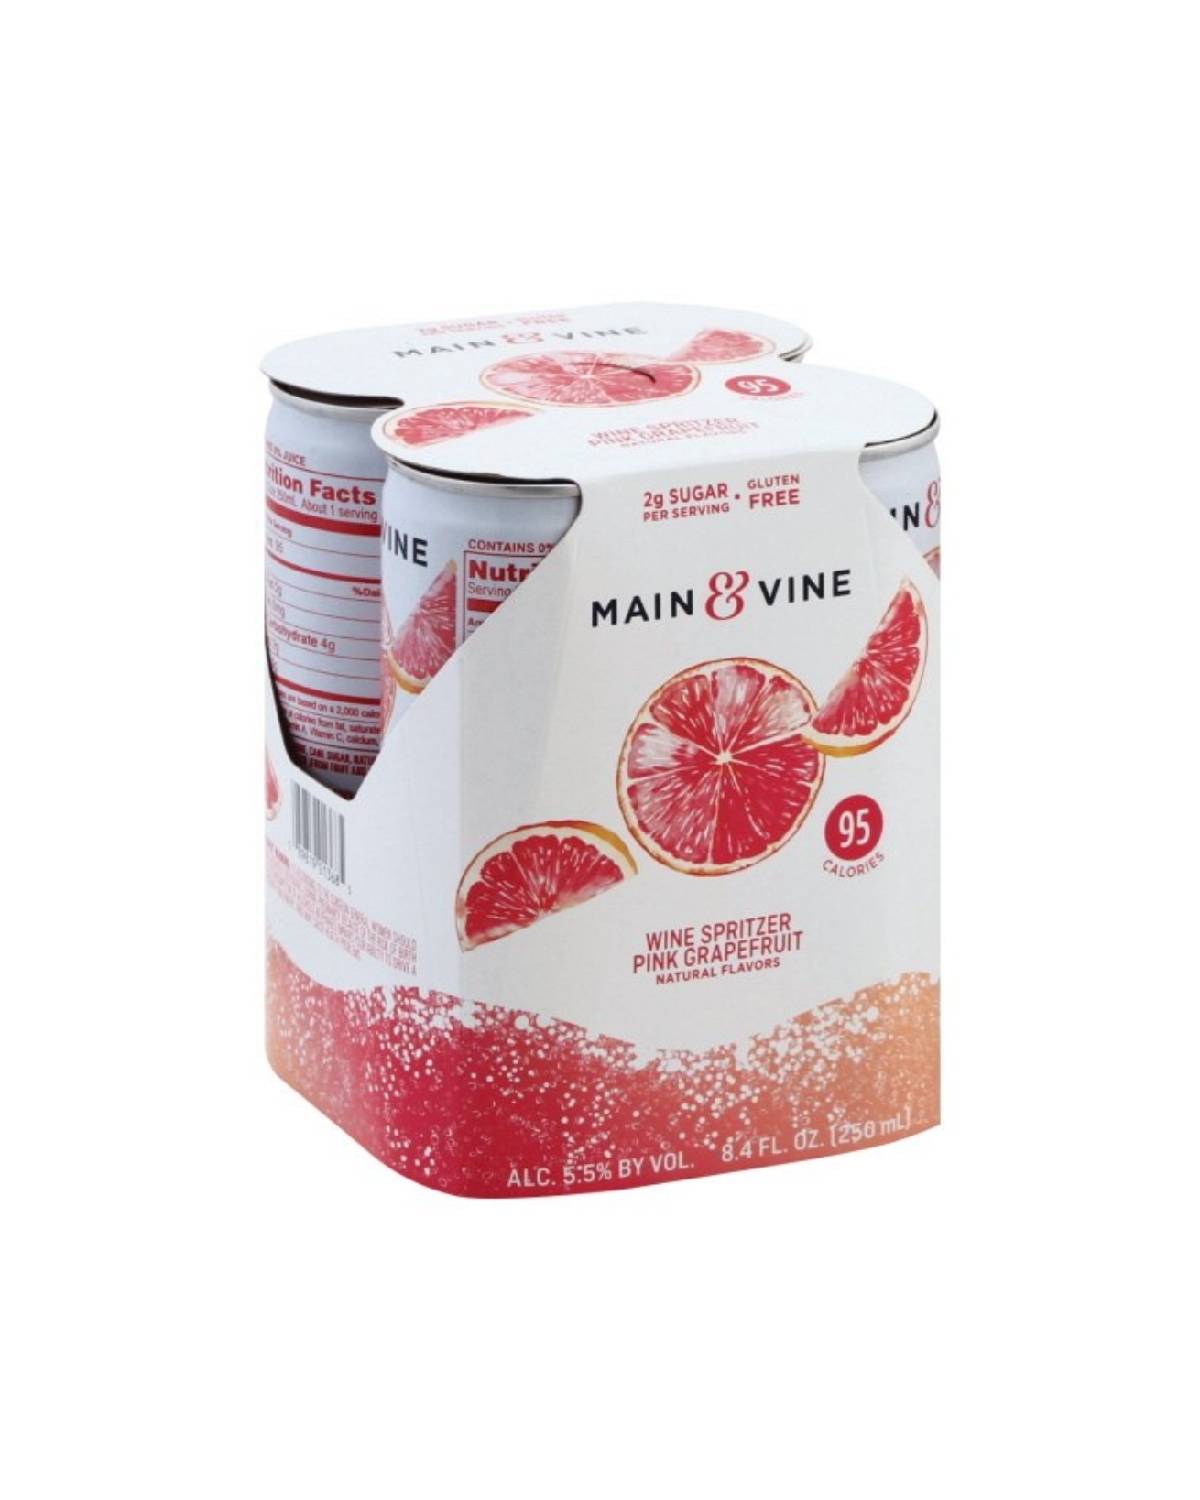 Main & Vine Pink Grapefruit 4pk